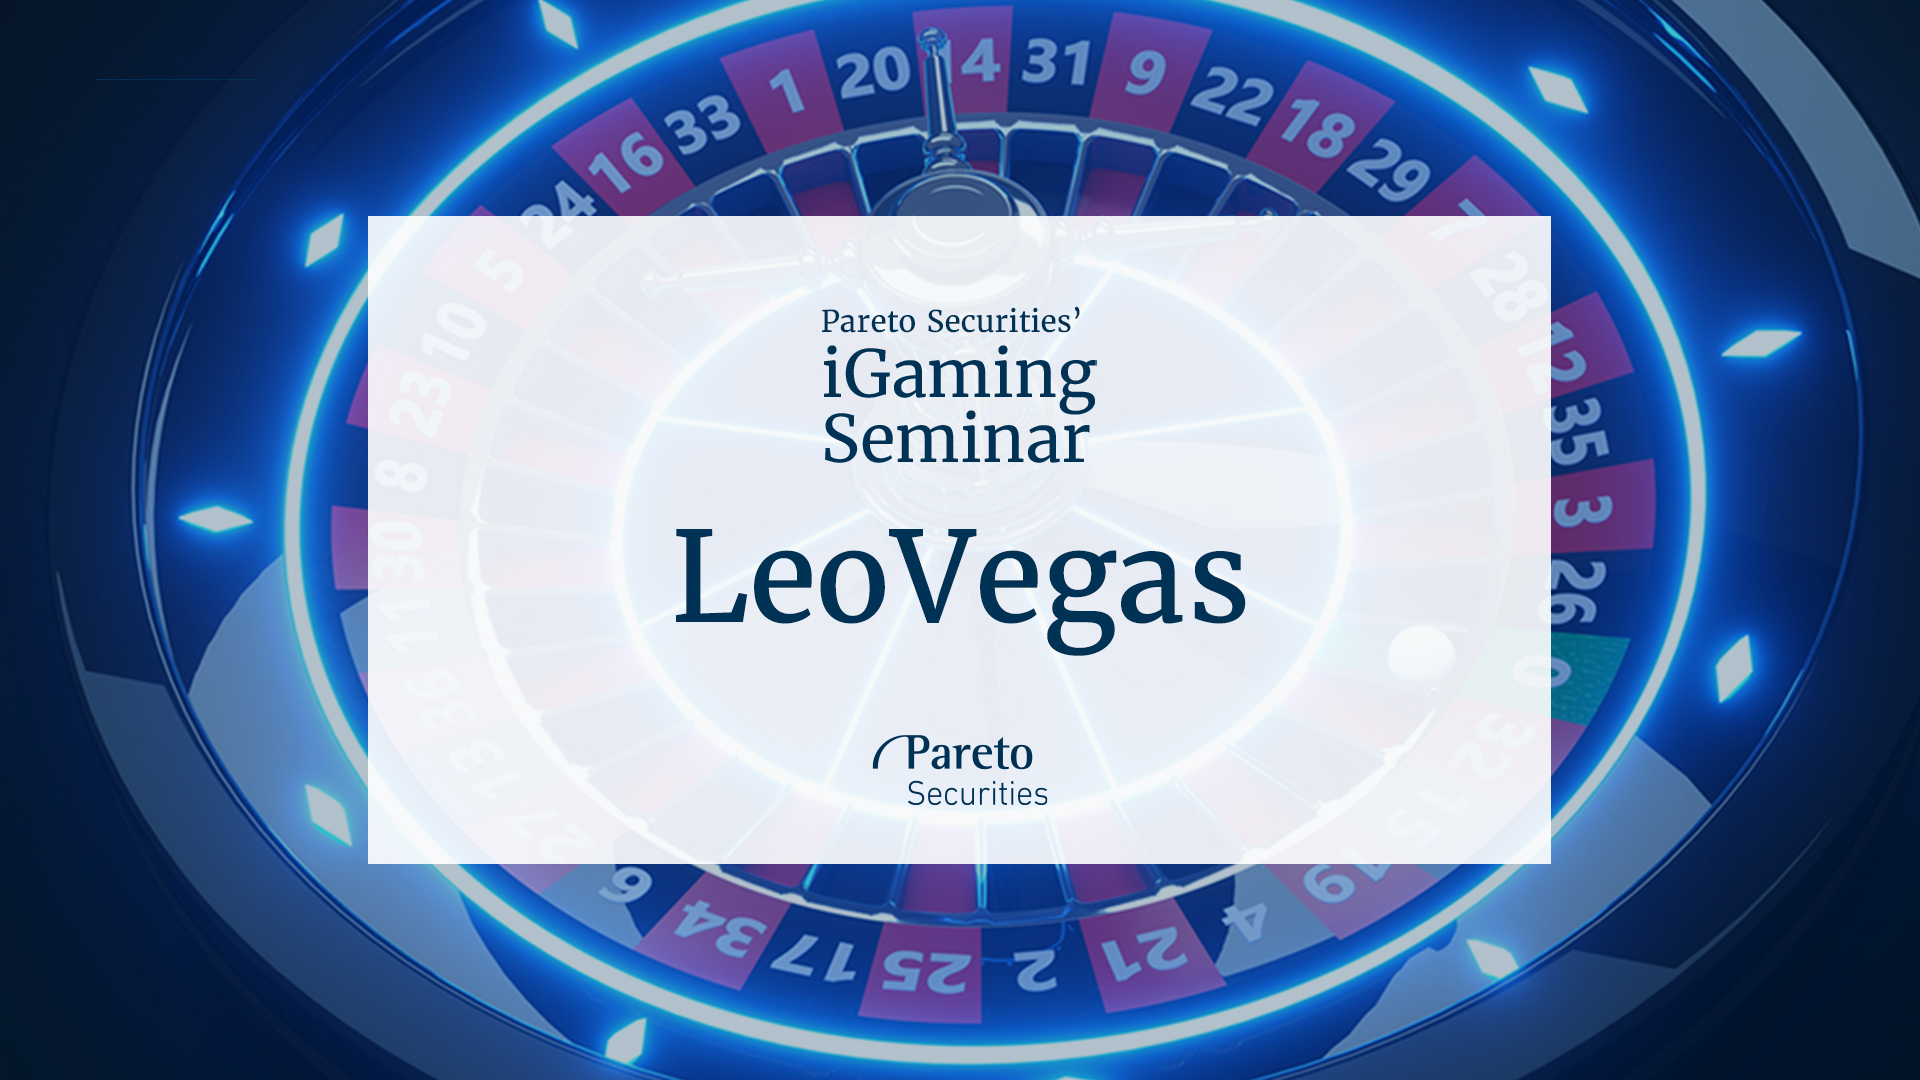 LeoVegas / Pareto Securities’ virtual iGaming seminar